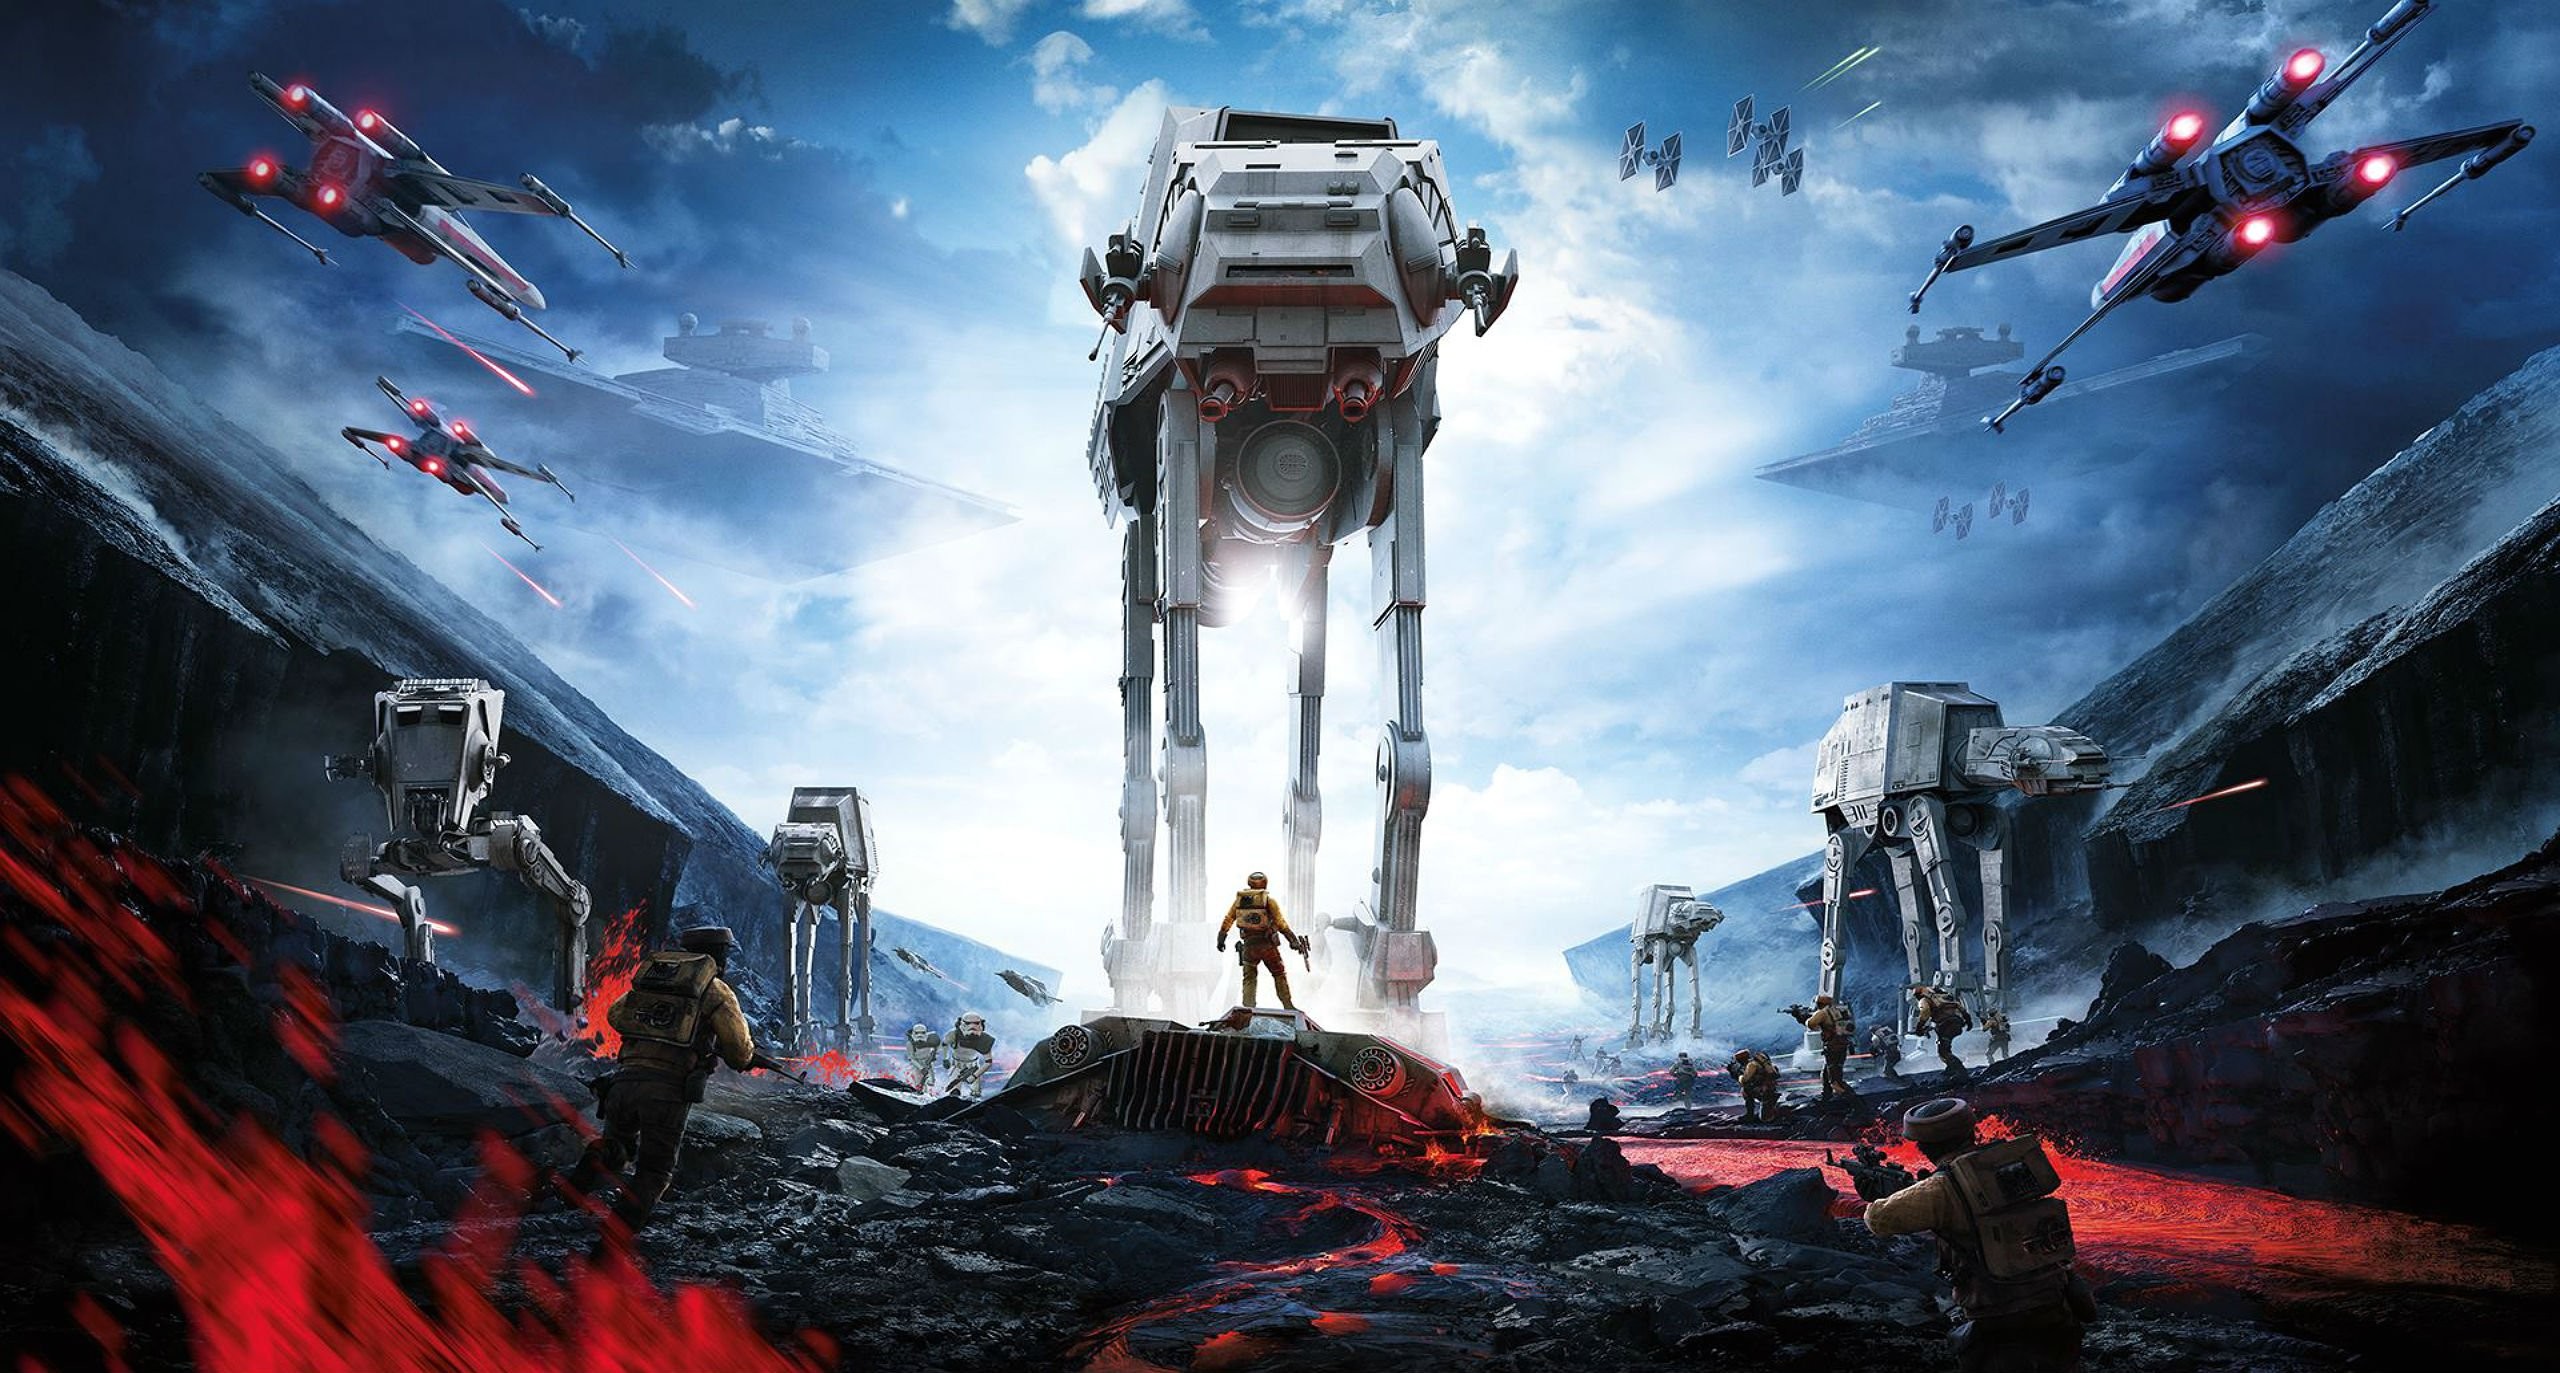 Star Wars Battlefront Wallpaper background picture